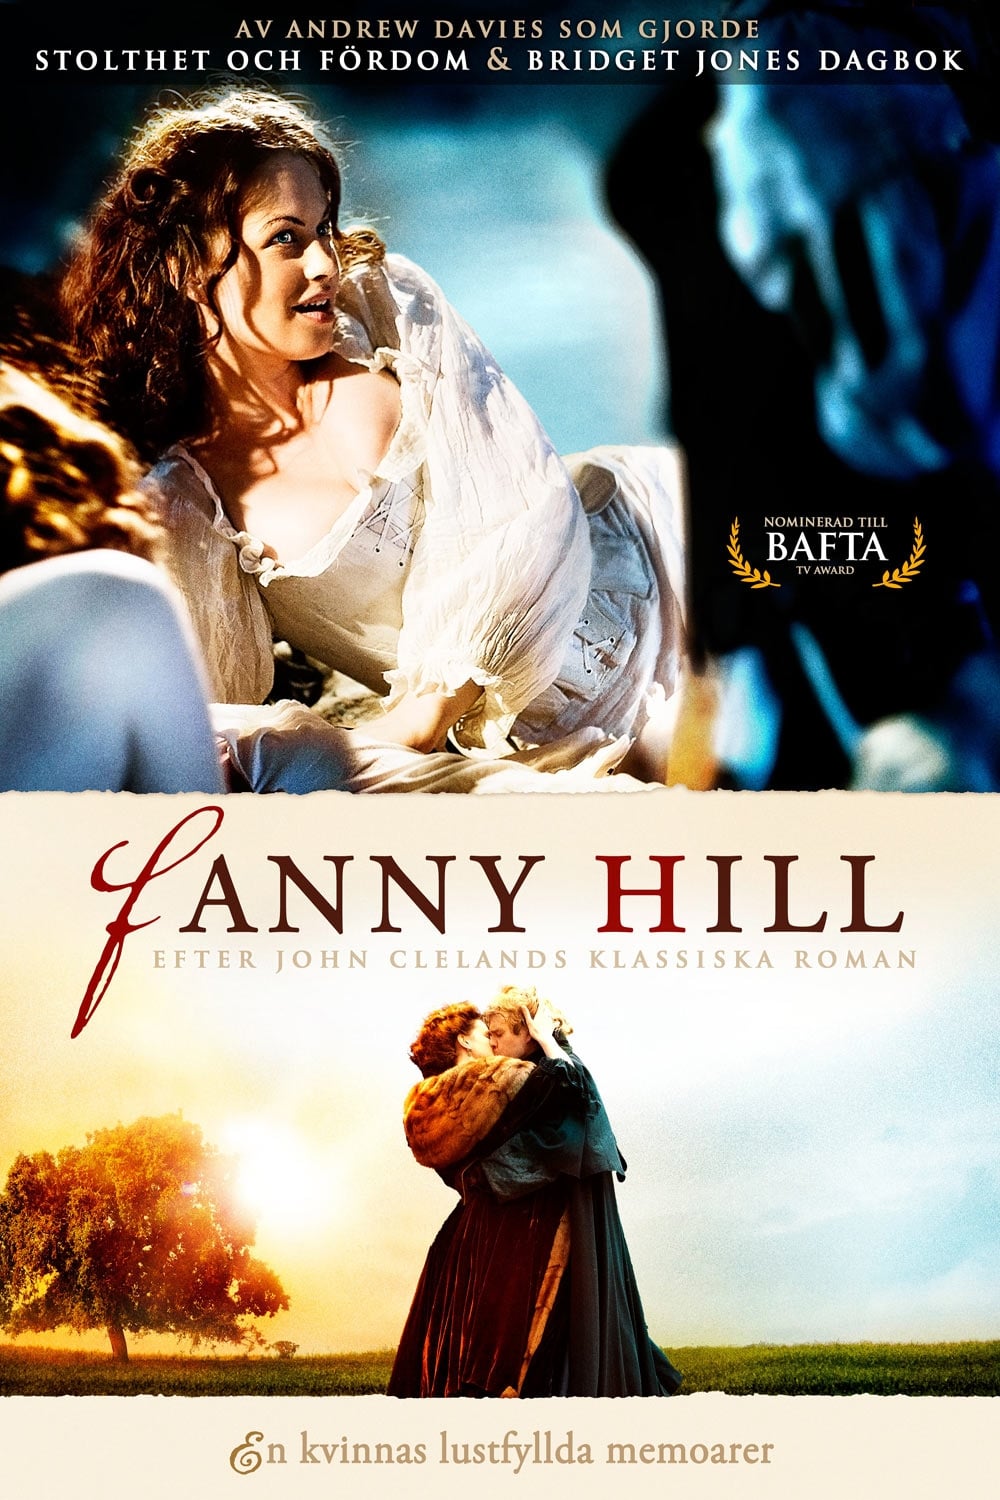 Fanny hill zwierzenia kurtizany ebook torrents the nick hexum quintet torrent